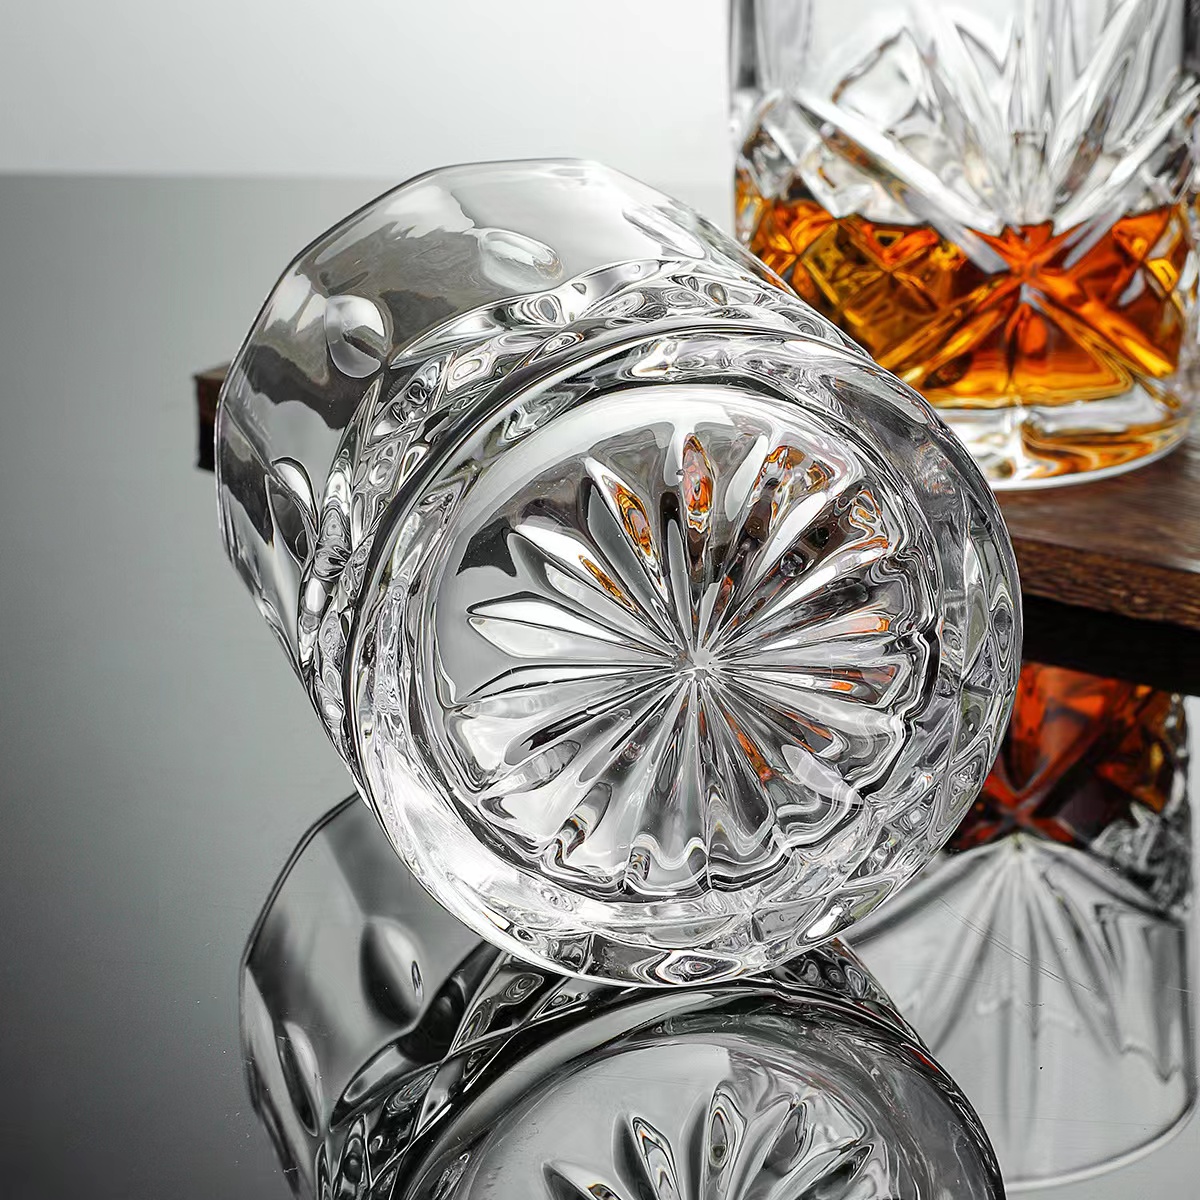 Old Fashioned Whisky Glasses Para sa Scotch, Bourbon, Liquor04 - 副本